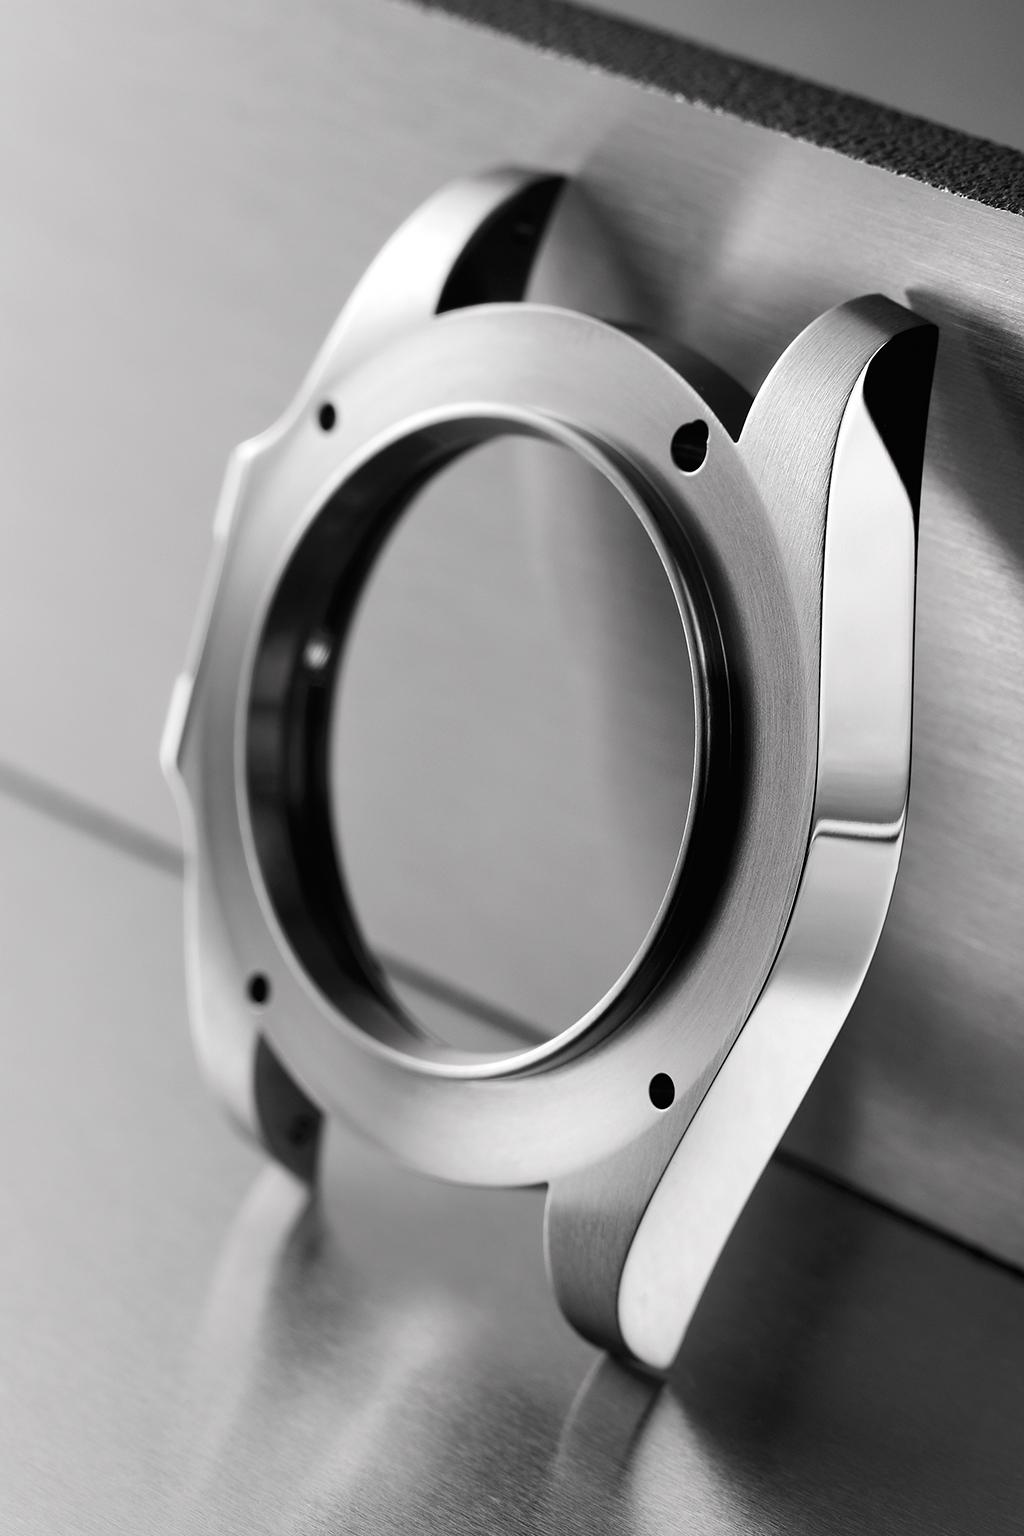 Características ACERO INOXIDABLE 904L Rolex utiliza acero inoxidable 904L para las cajas de acero de sus relojes.